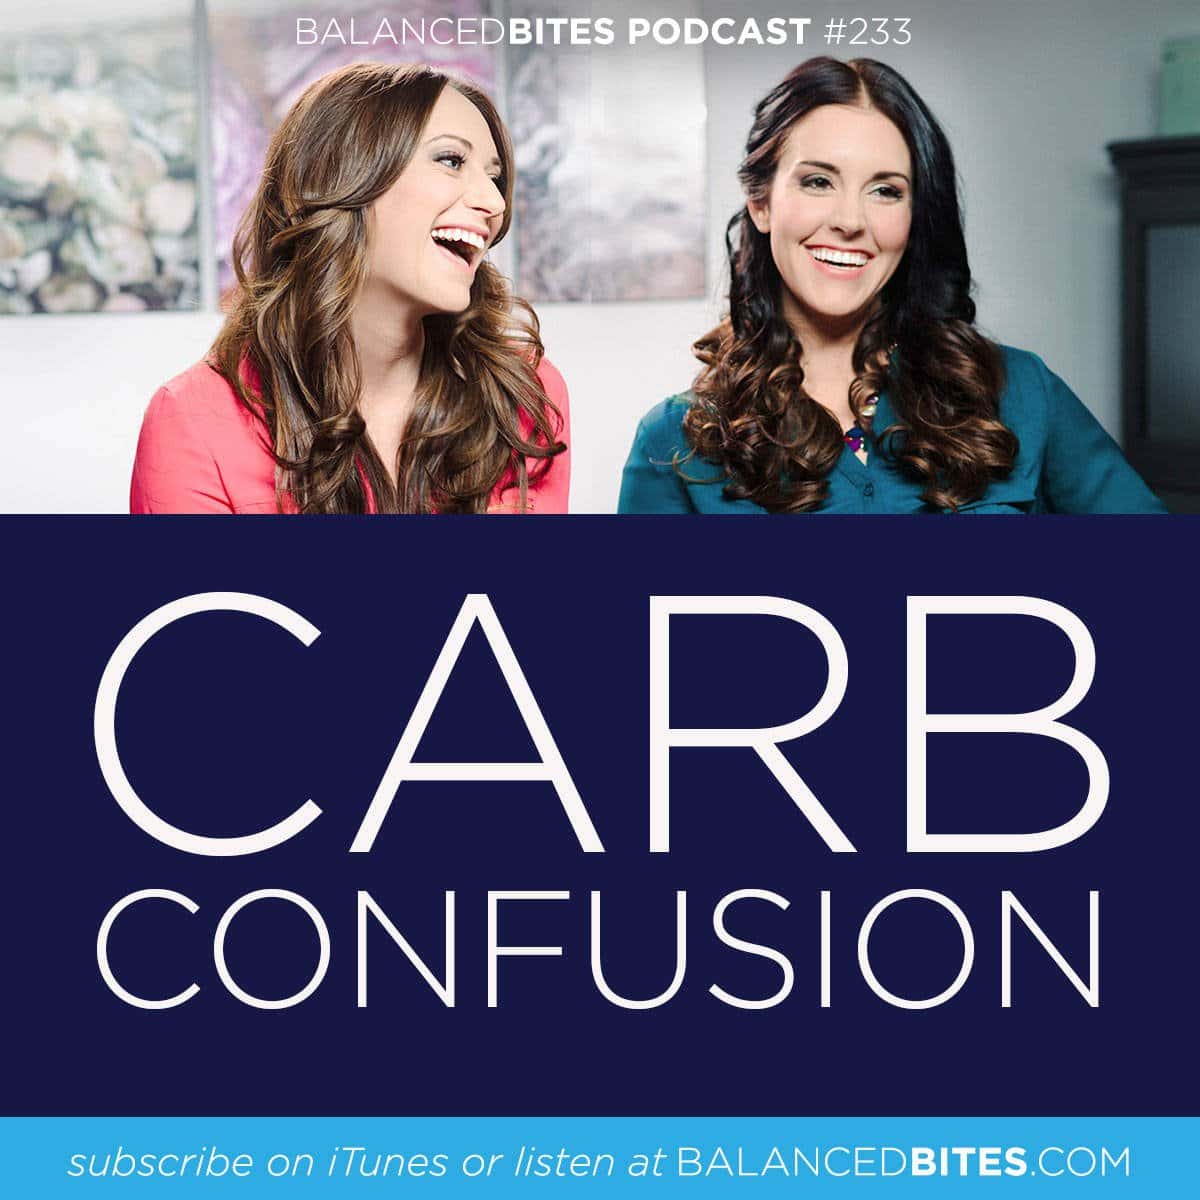 Carb Confusion - Diane Sanfilippo, Liz Wolfe | Balanced Bites